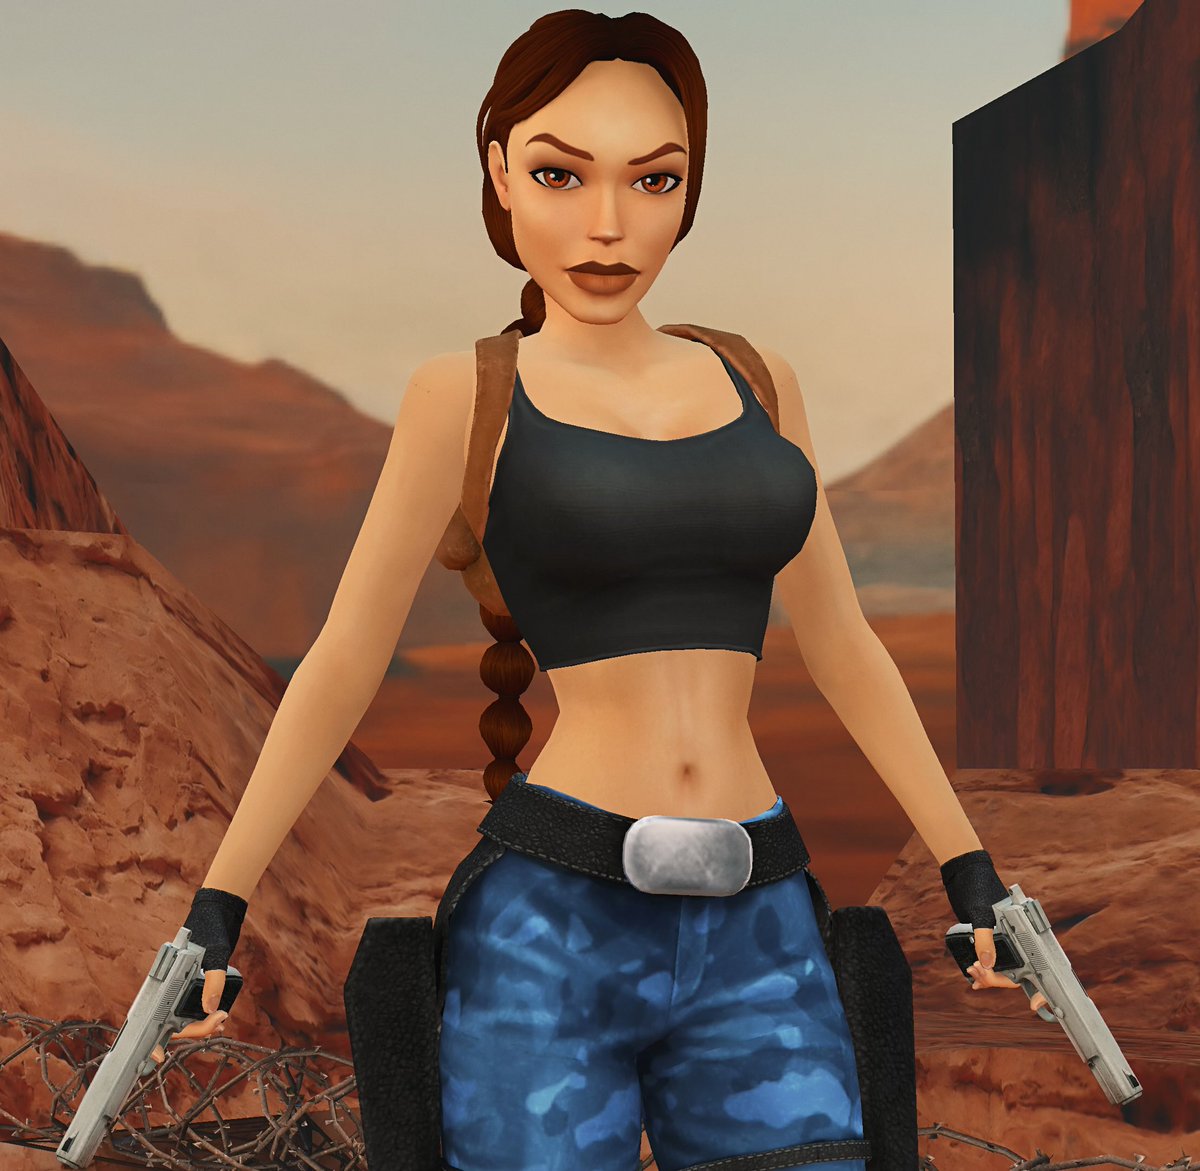 Lara Croft in Tomb Raider III Remastered